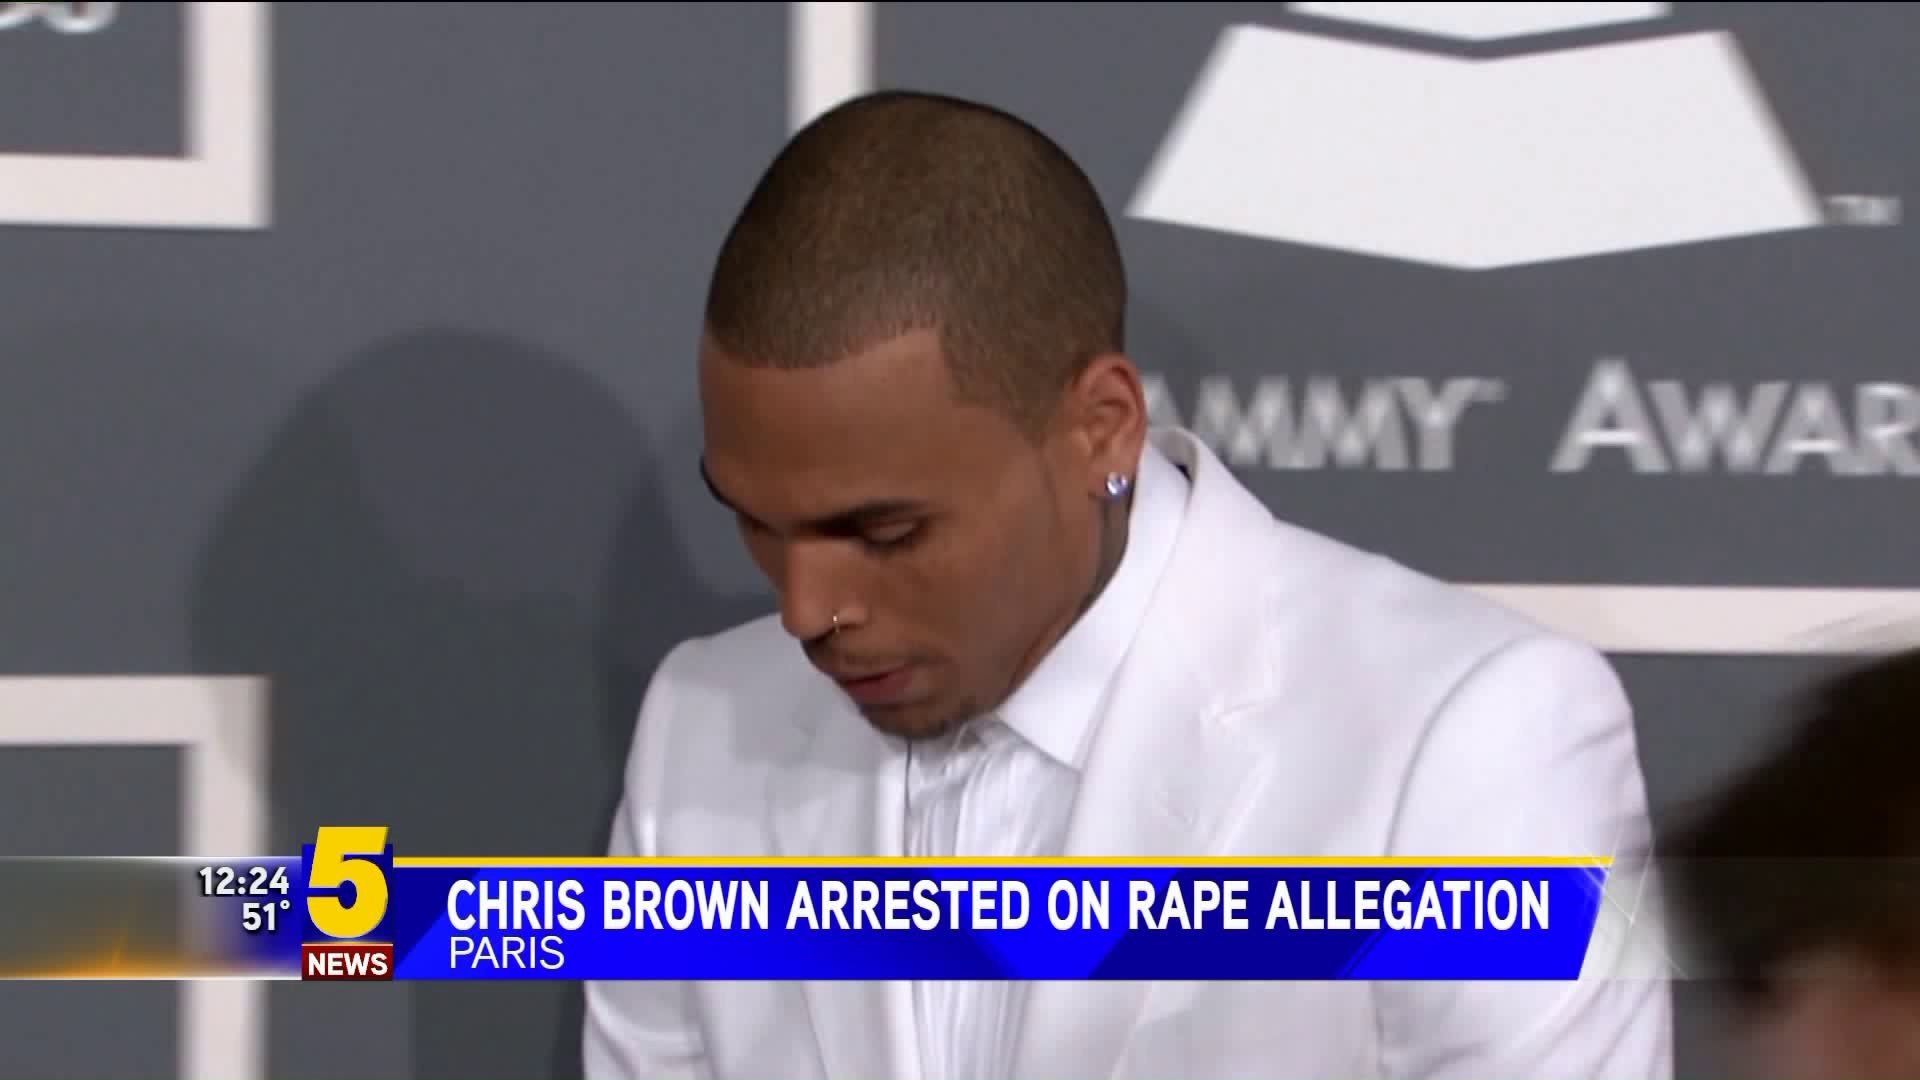 Chris Brown Arrested On Rape Allegations In Paris